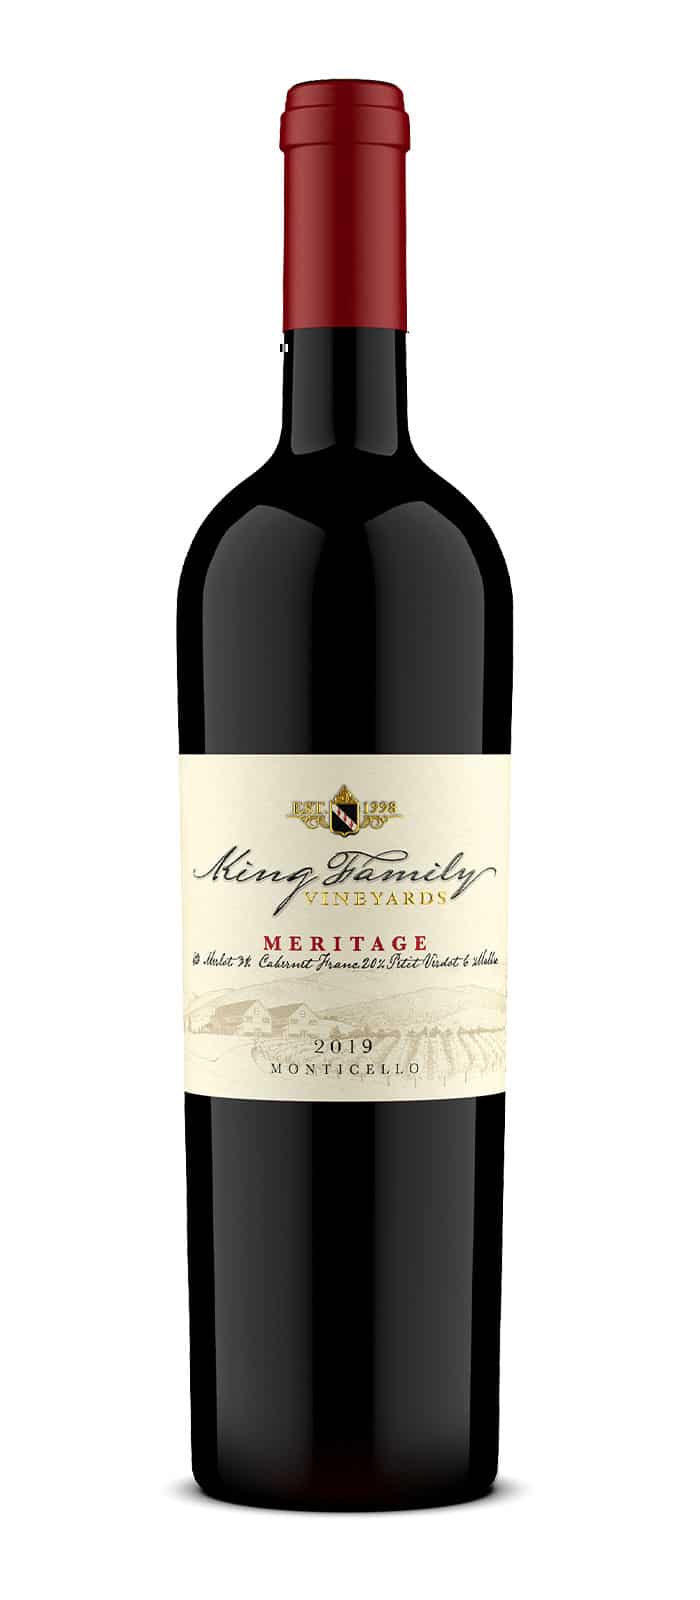 King Family Vineyards 2019 Meritage wine